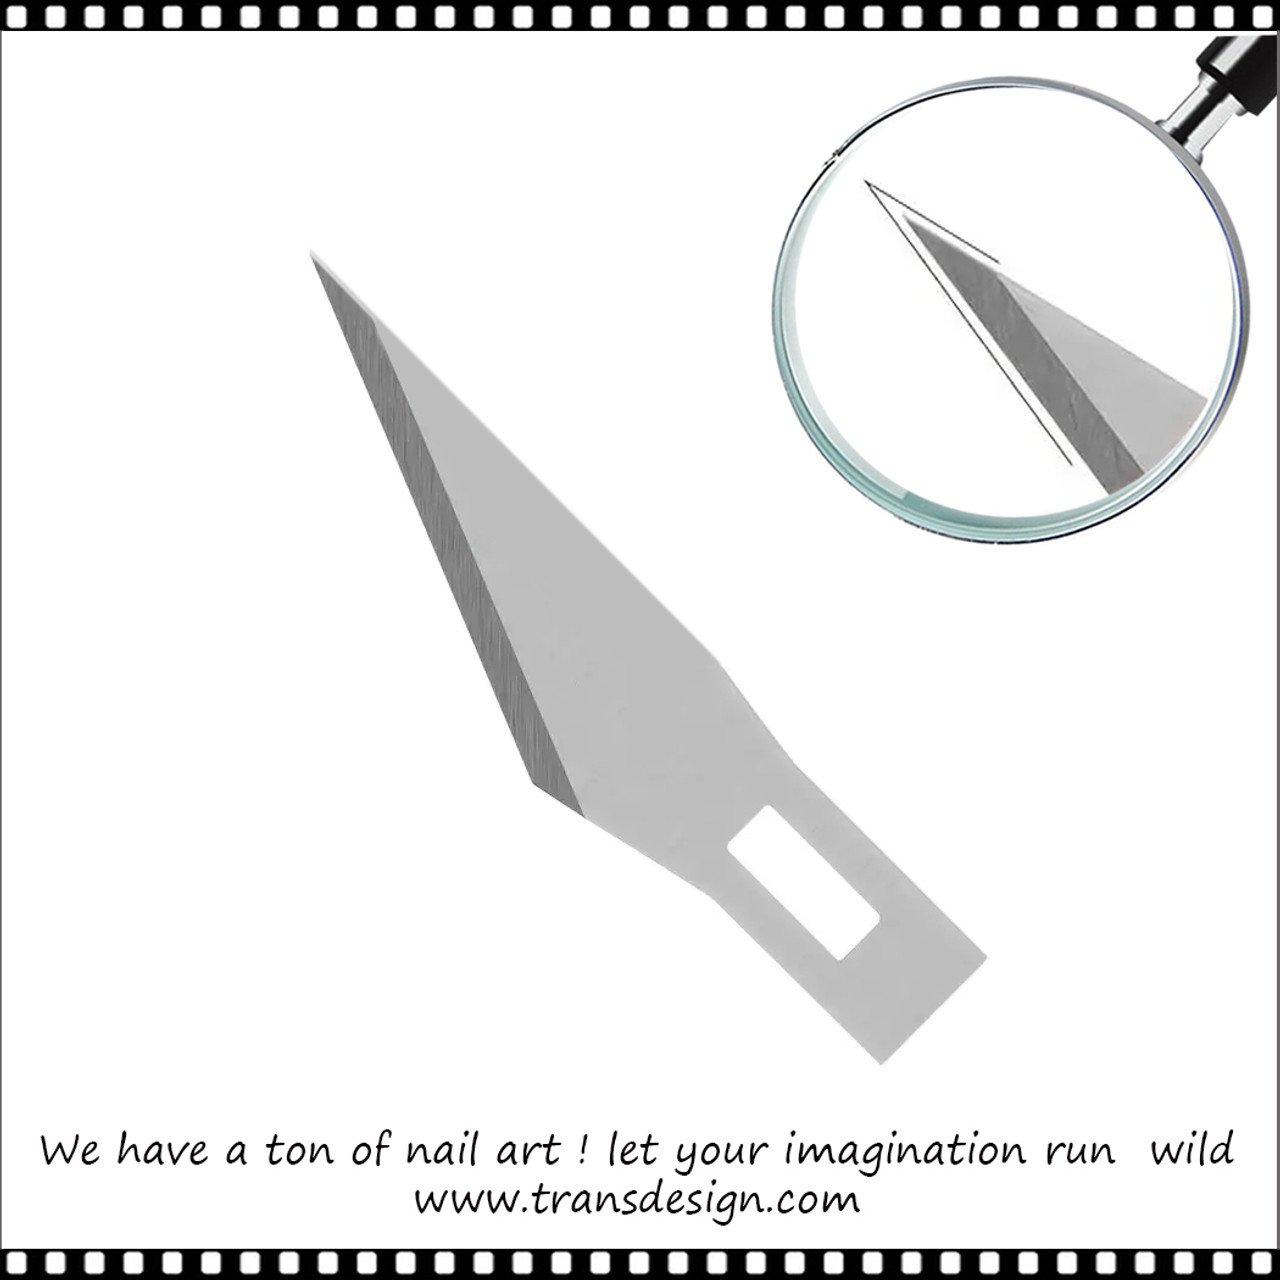 EXACTO Knife Blades 10/Pack - TDI, Inc